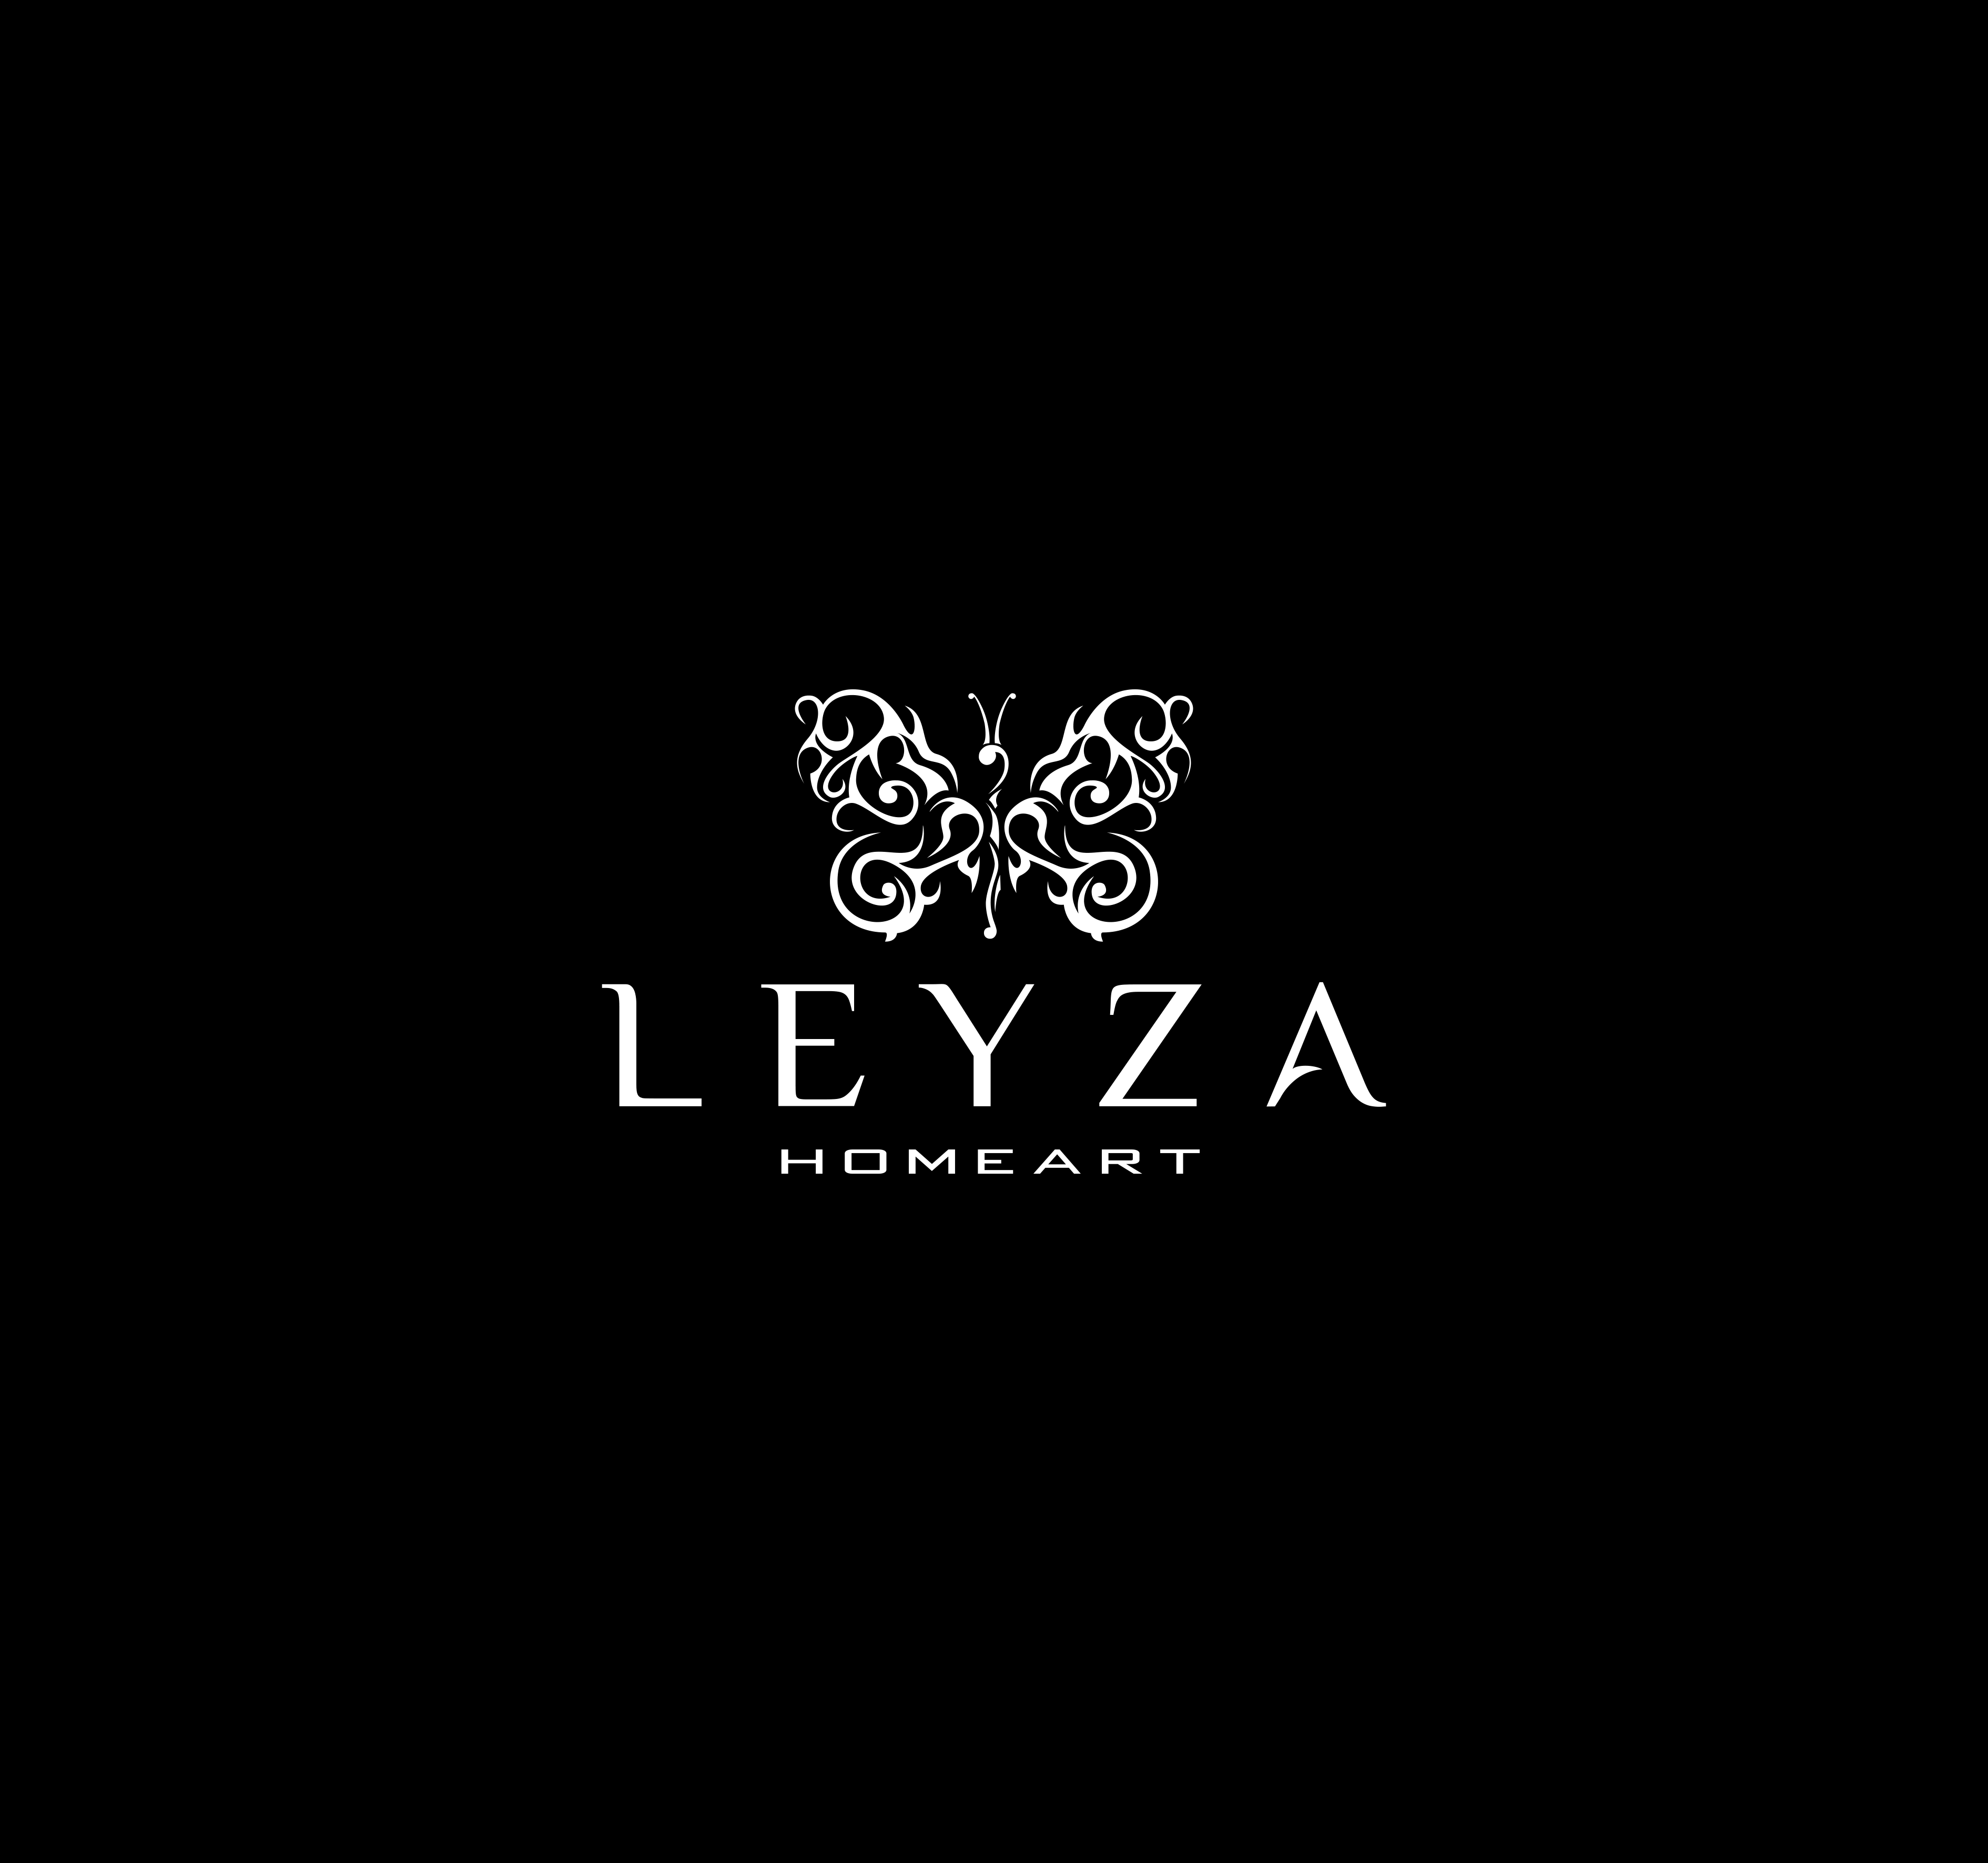 Leyza Home